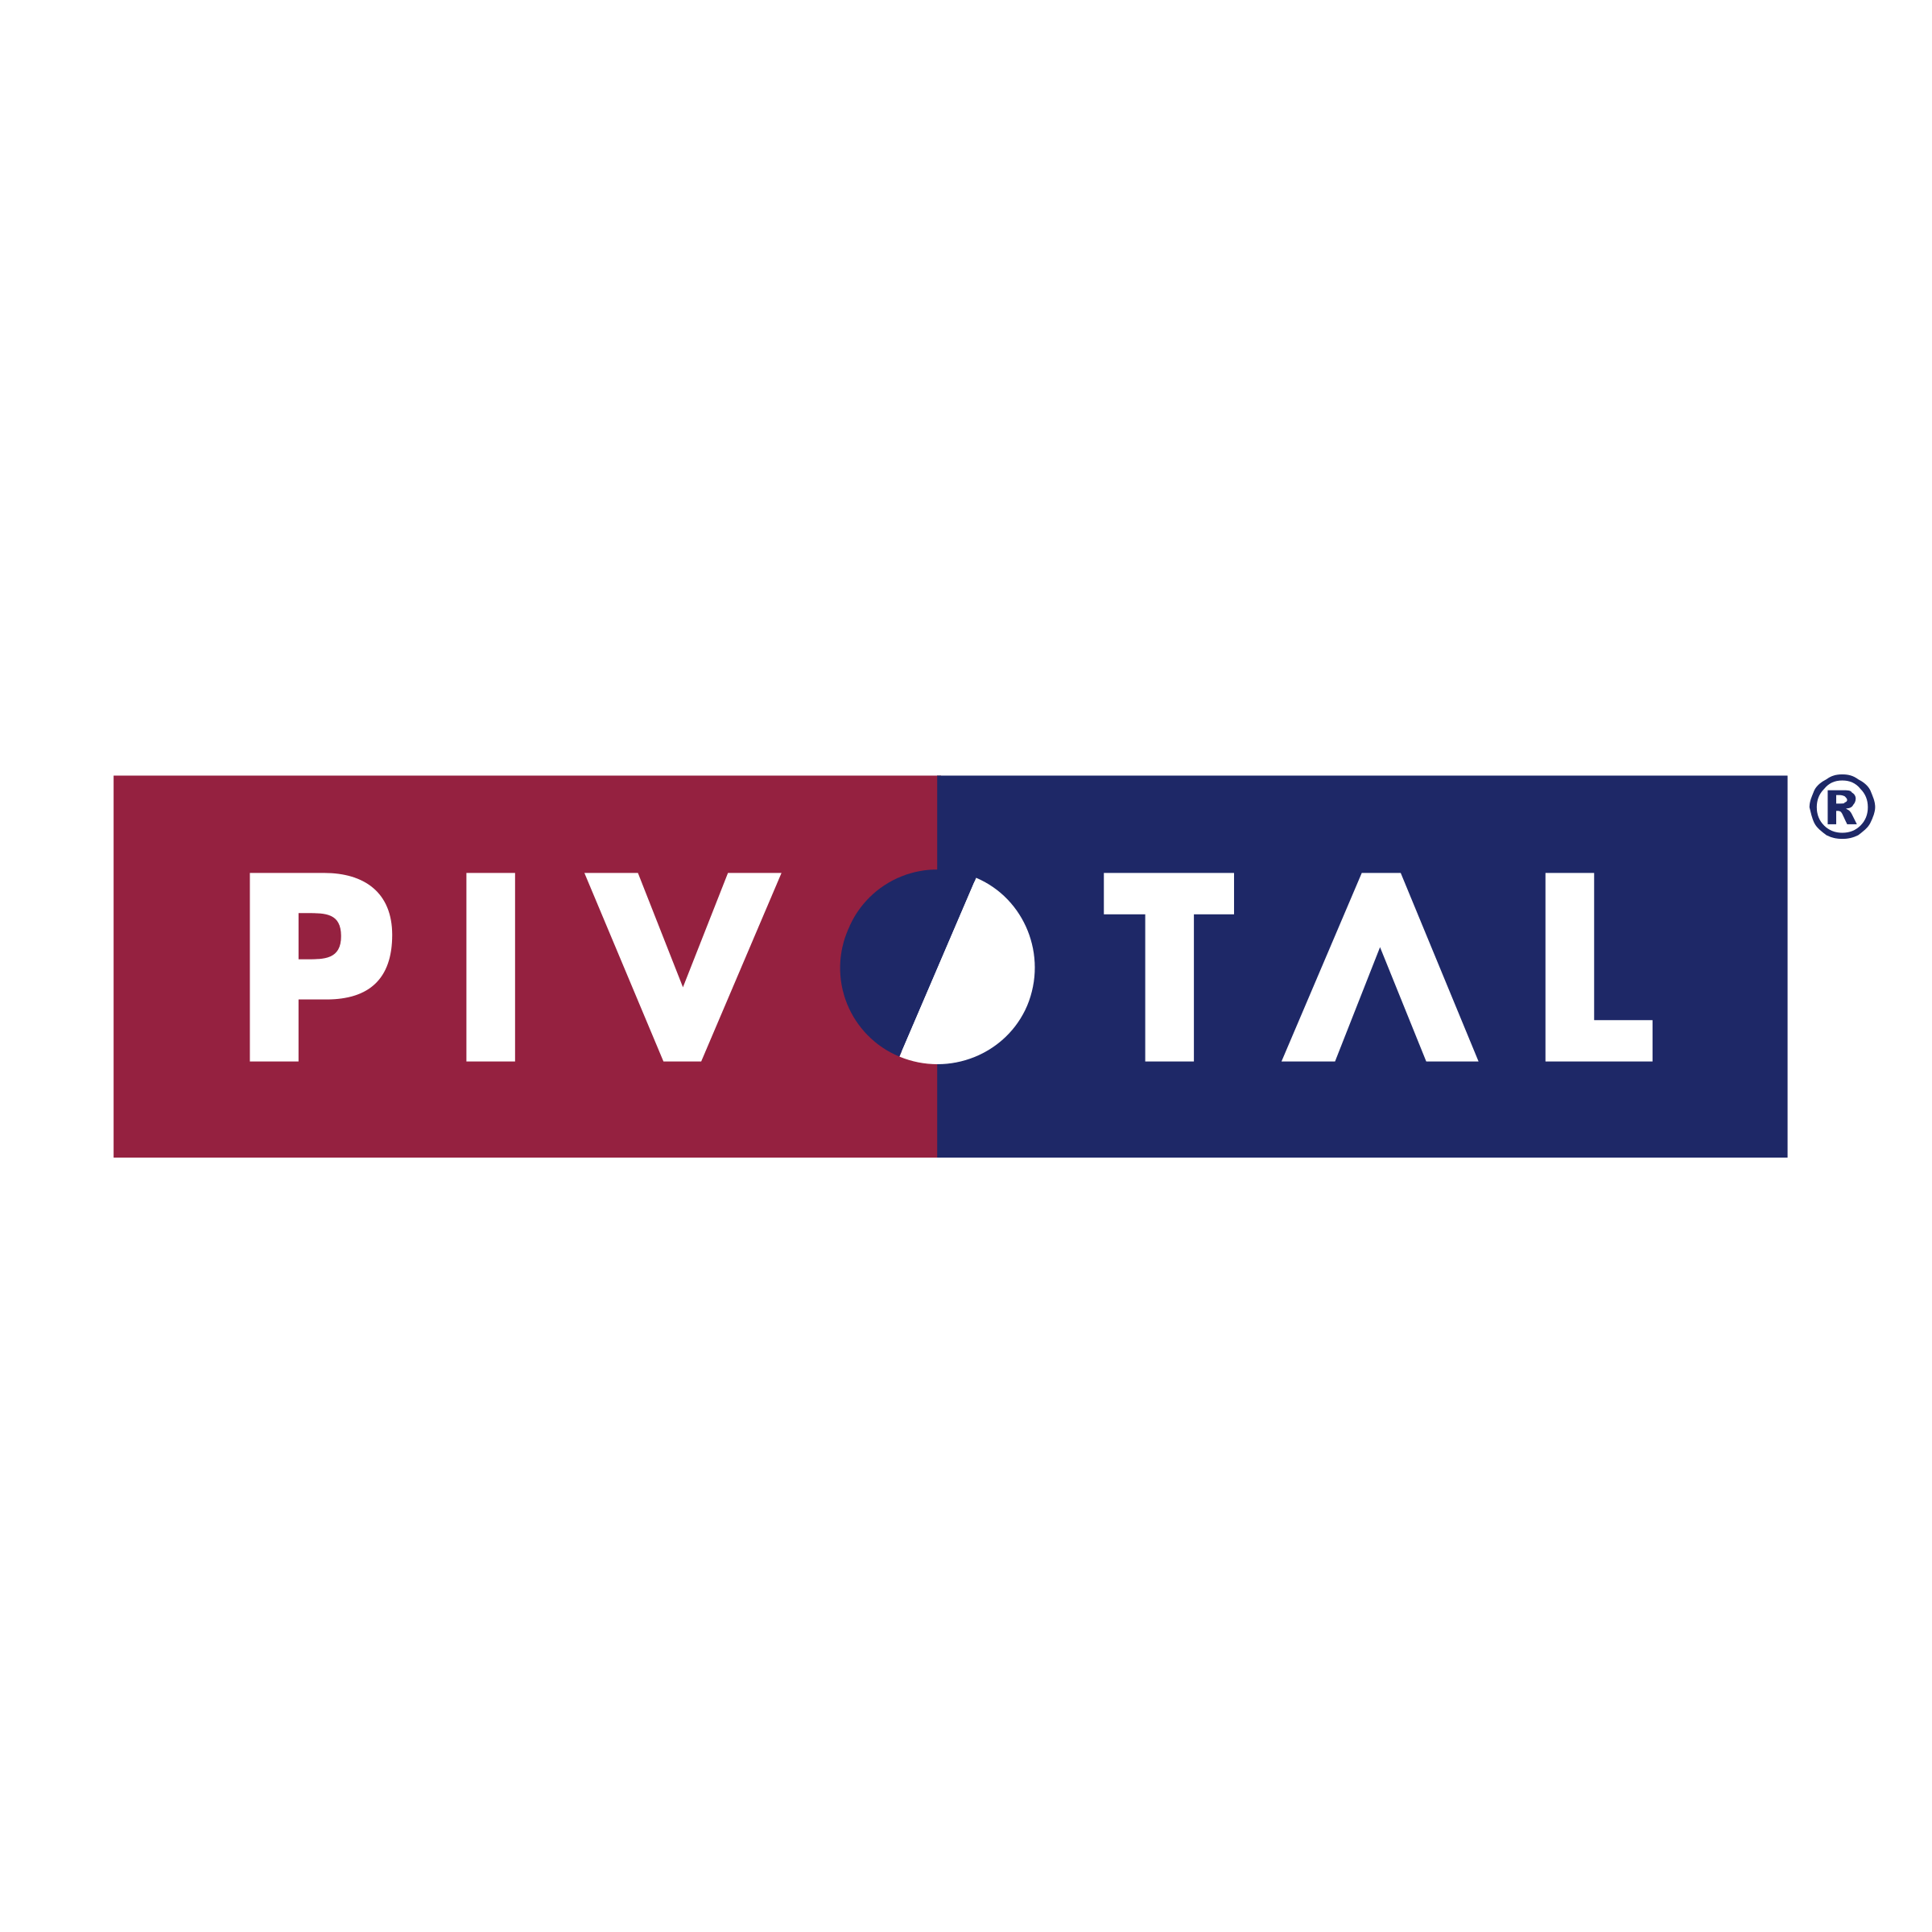 Pivotal Logo - Pivotal Logo PNG Transparent & SVG Vector